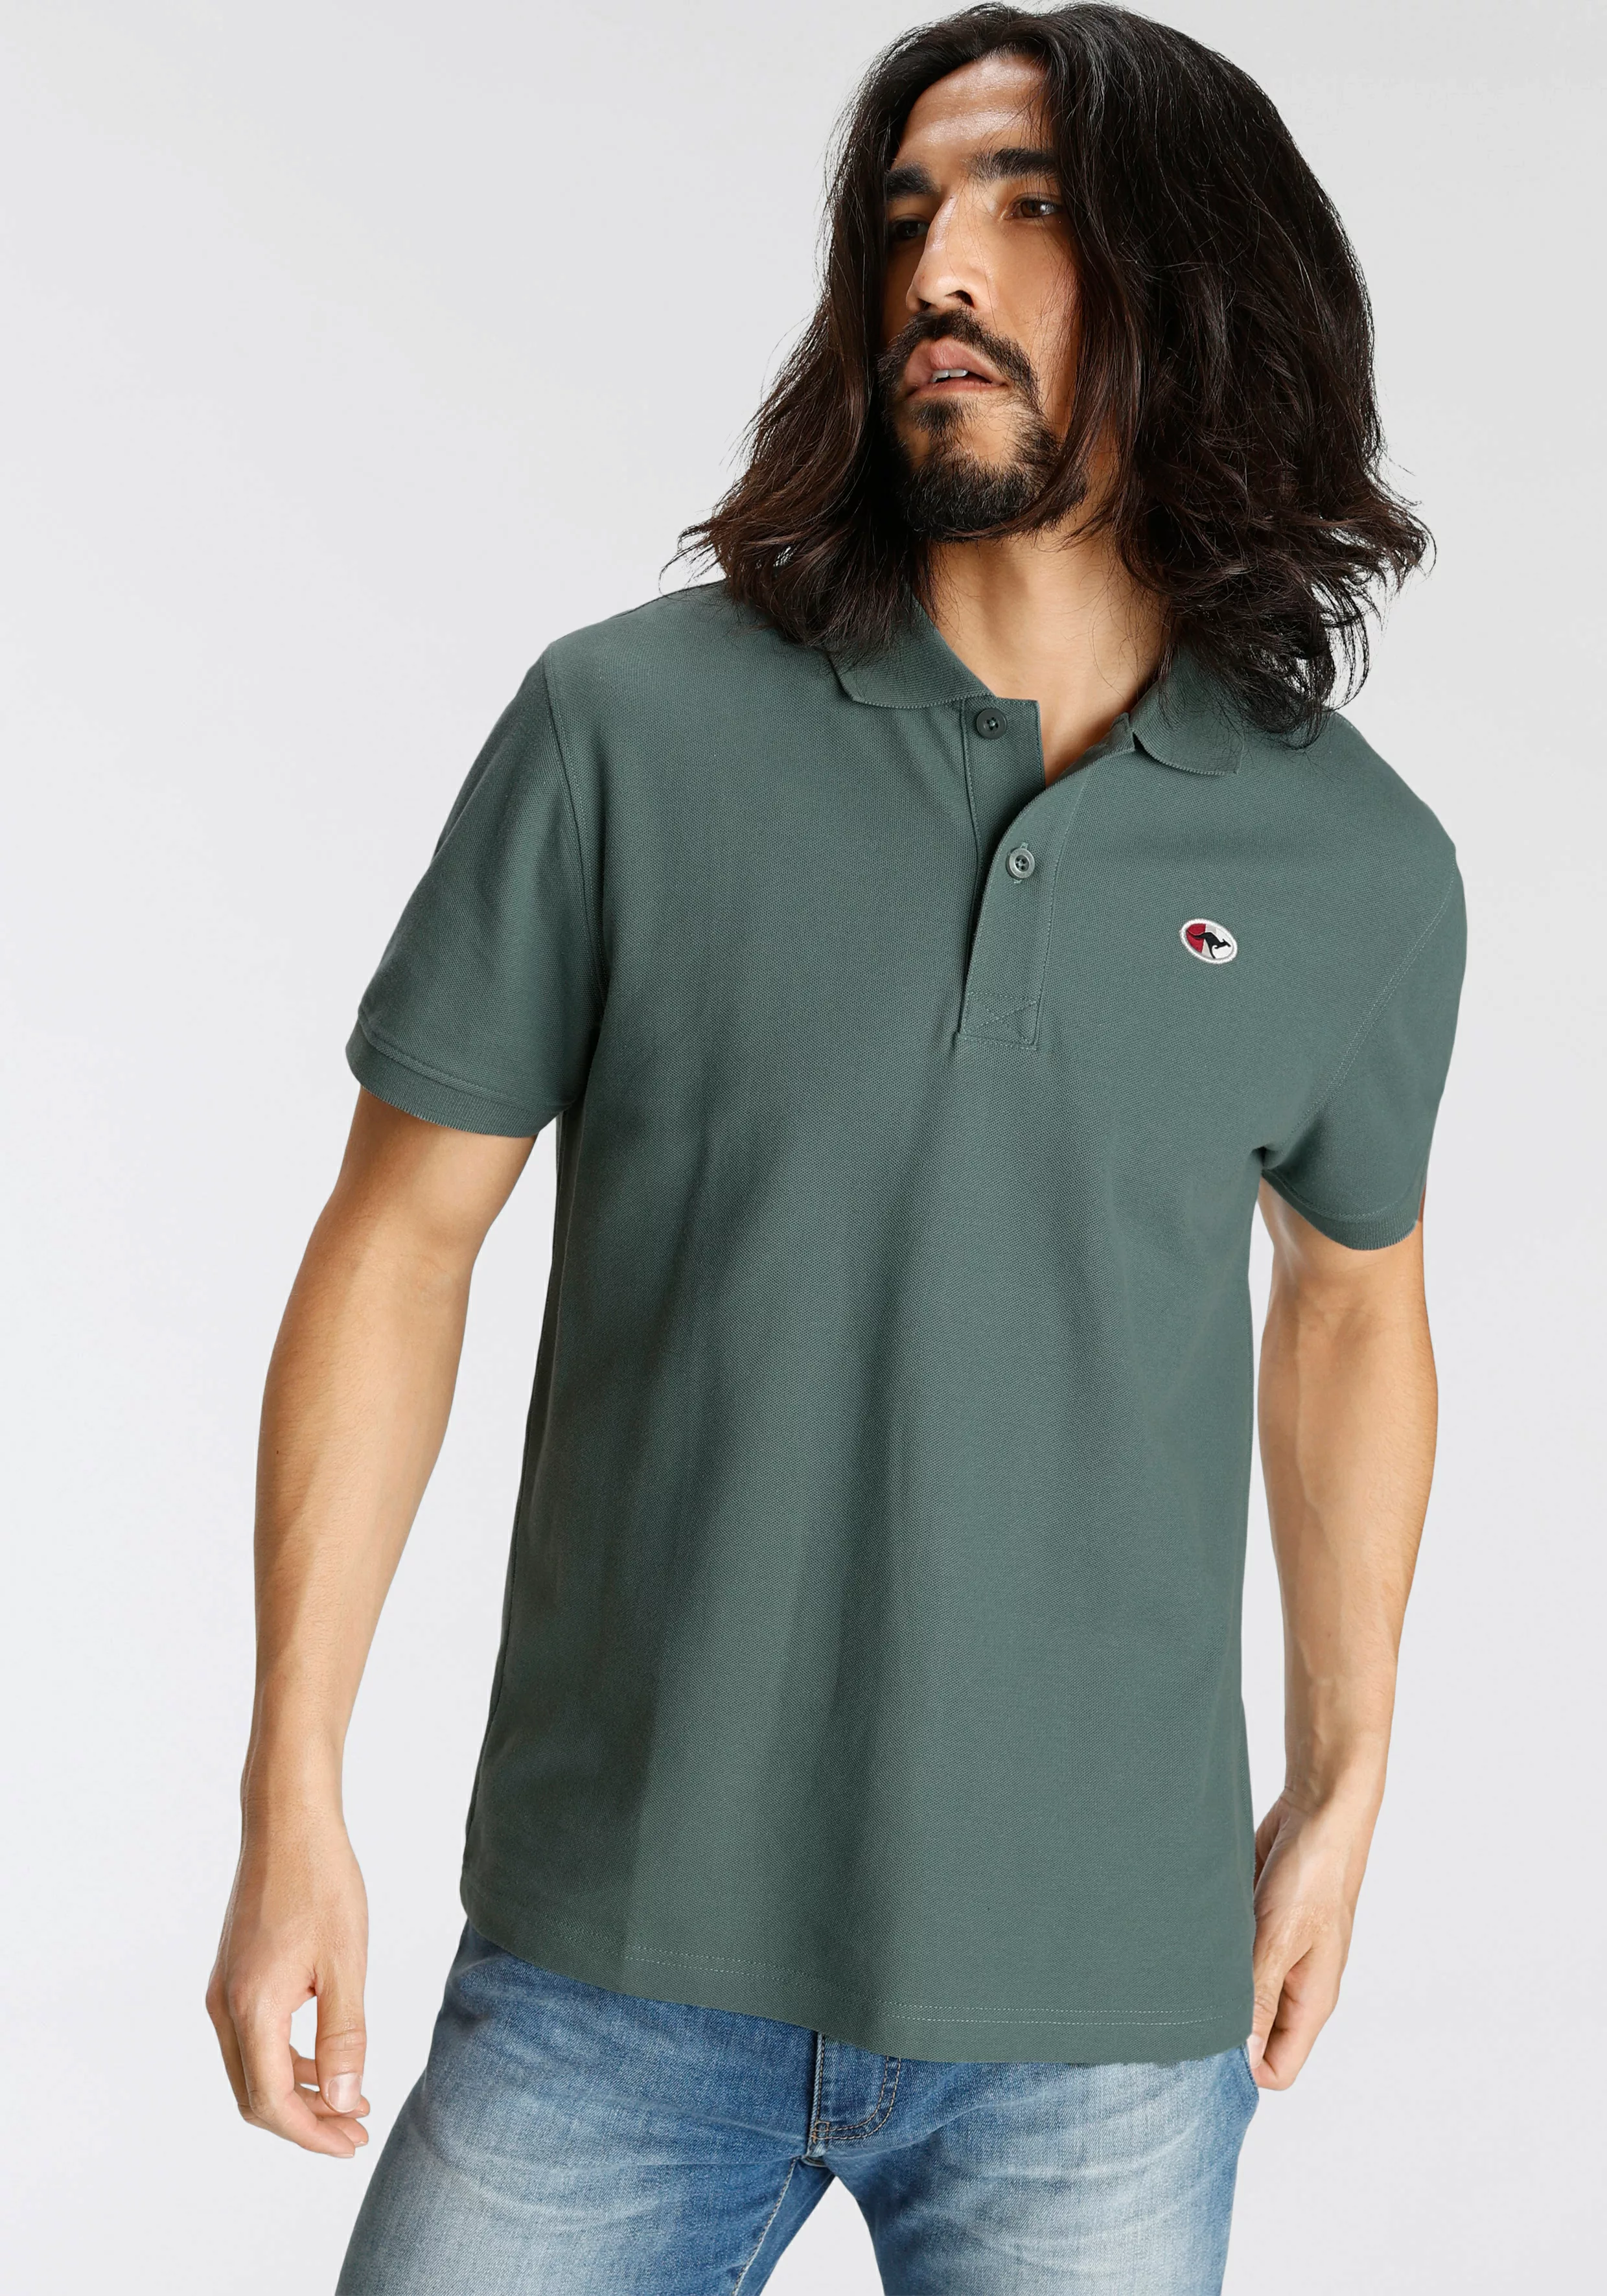 KangaROOS Poloshirt, unifarben günstig online kaufen